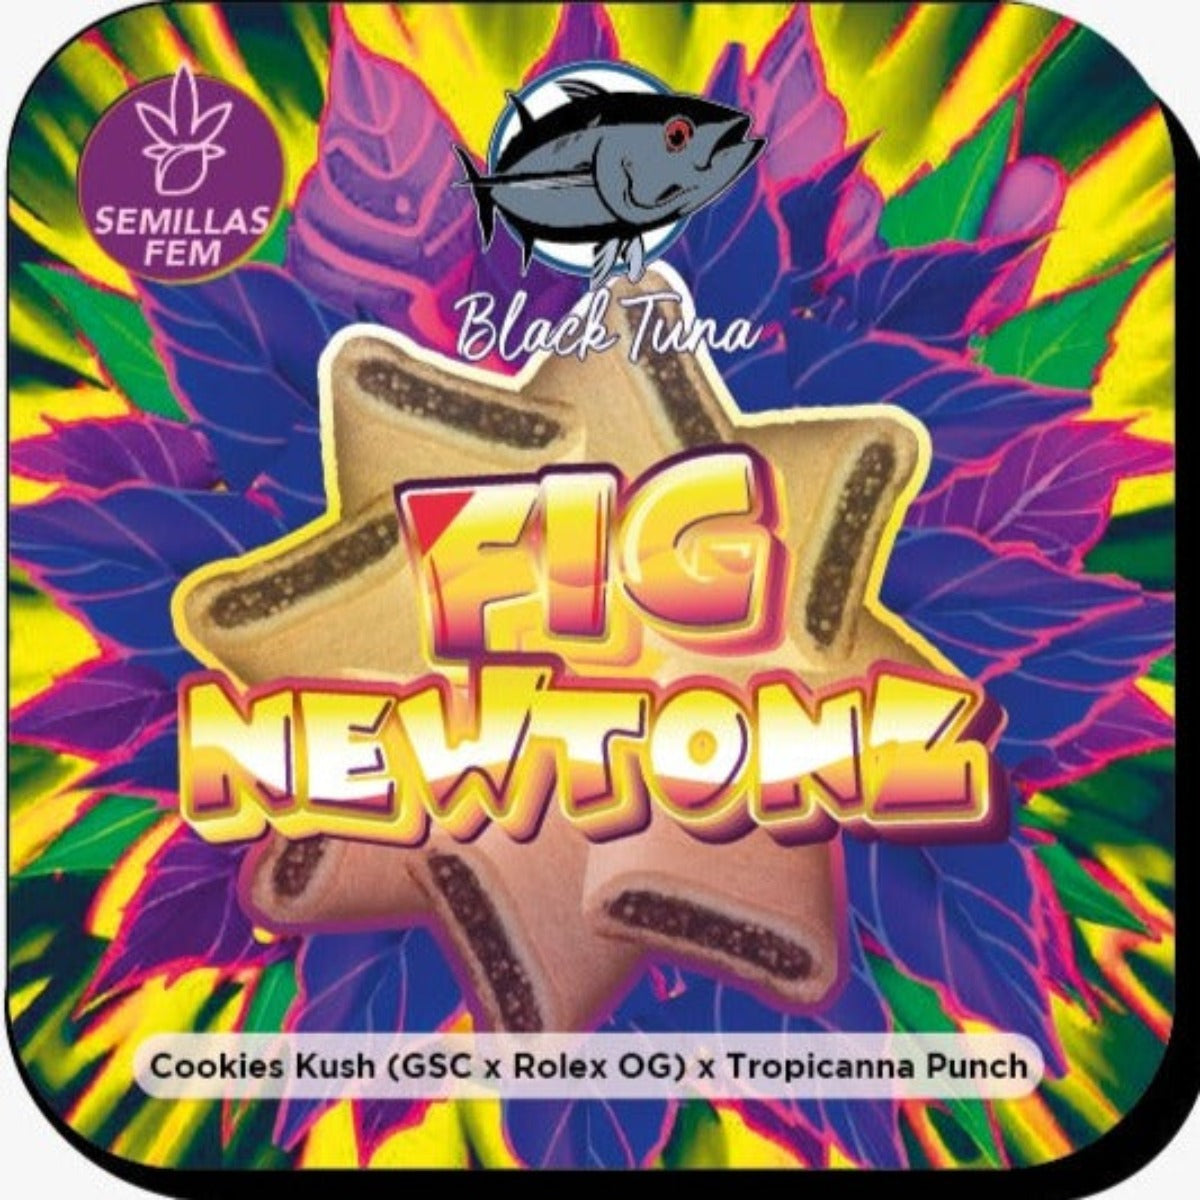 Fig Newtonz Feminizada - Black Tuna - Pack x 3